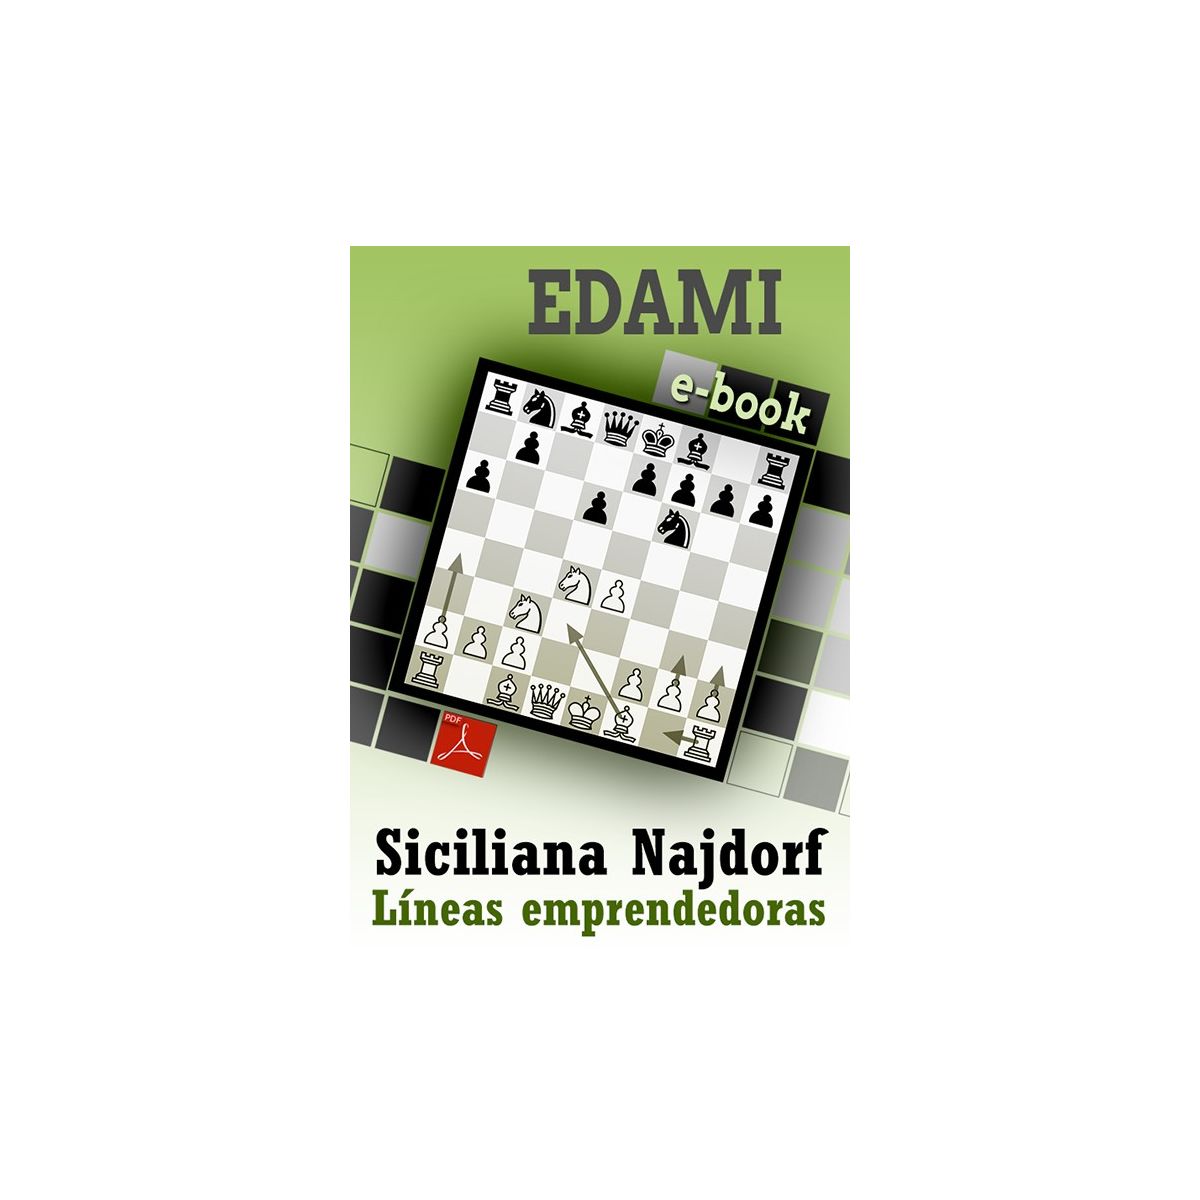 Ebook: Siciliana Najdorf - Líneas emprendedoras